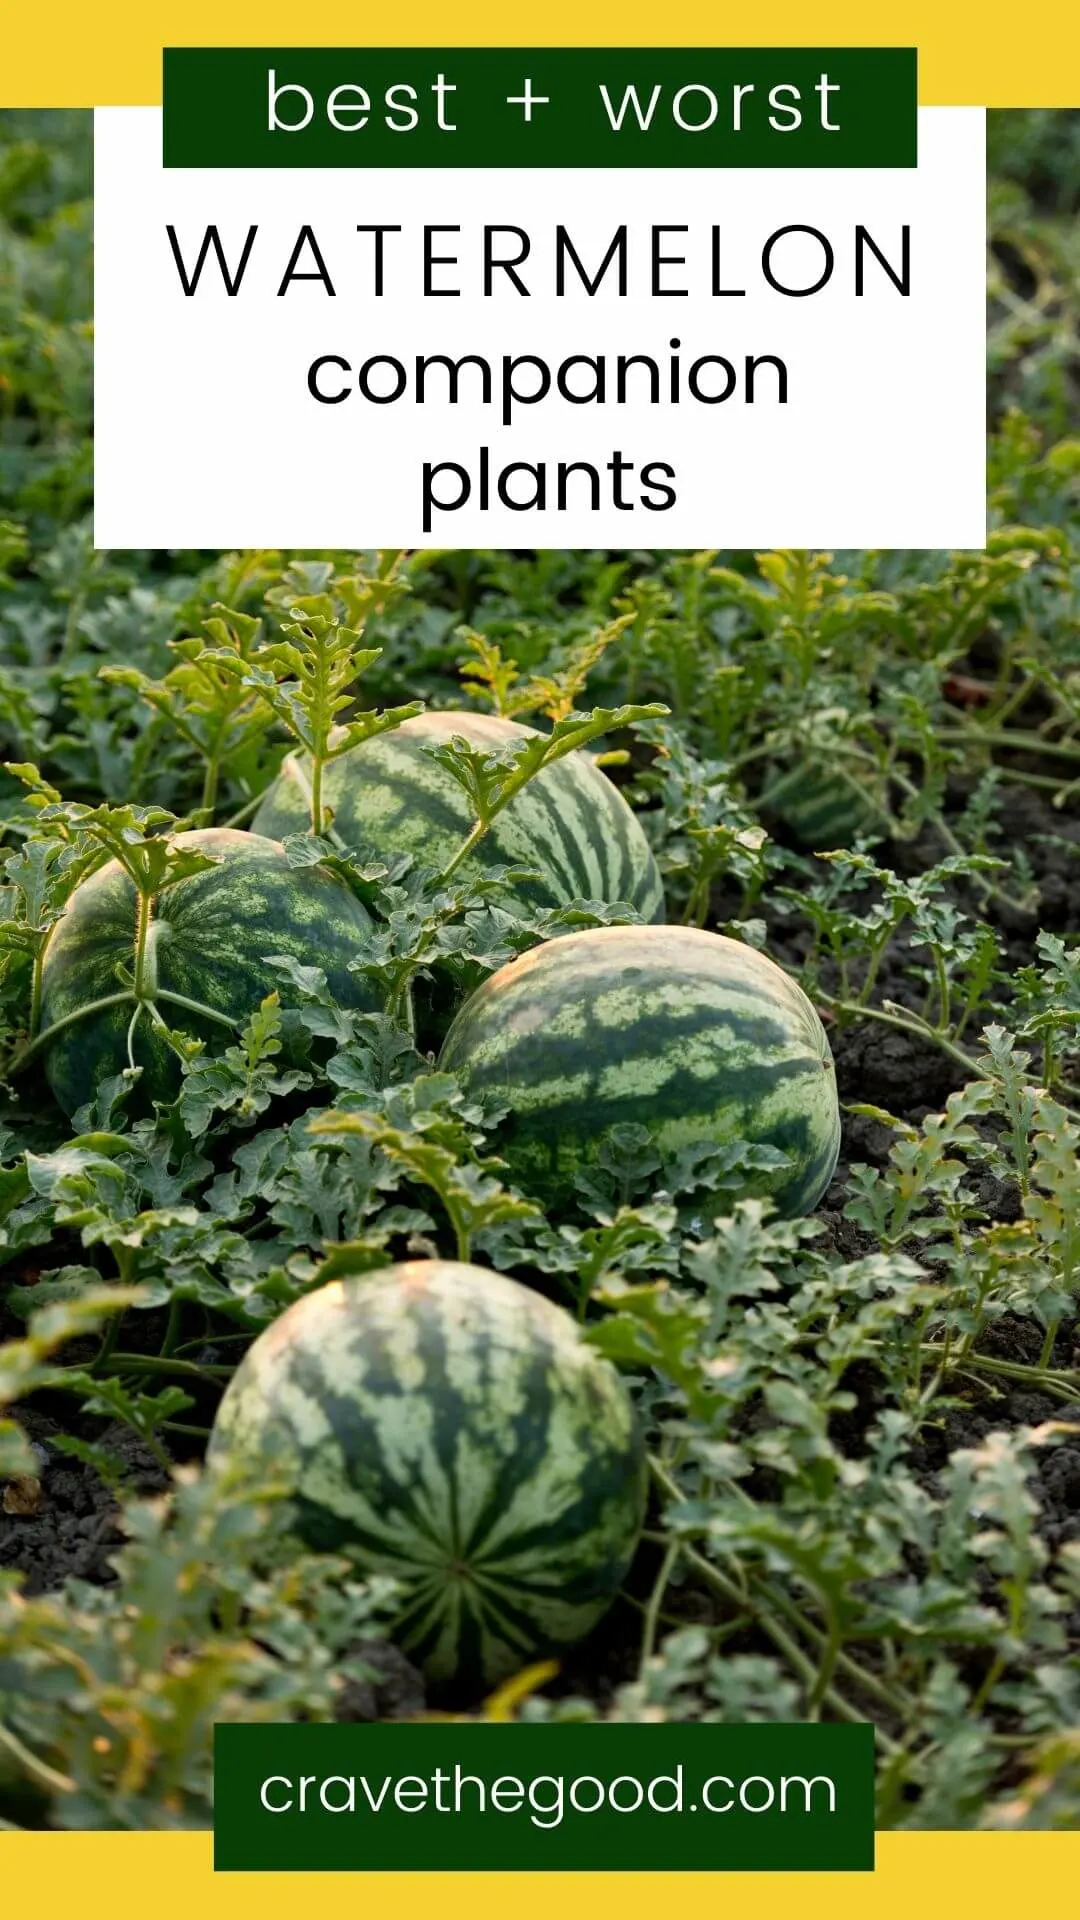 Best and worst watermelon companion plants pinterest graphic.